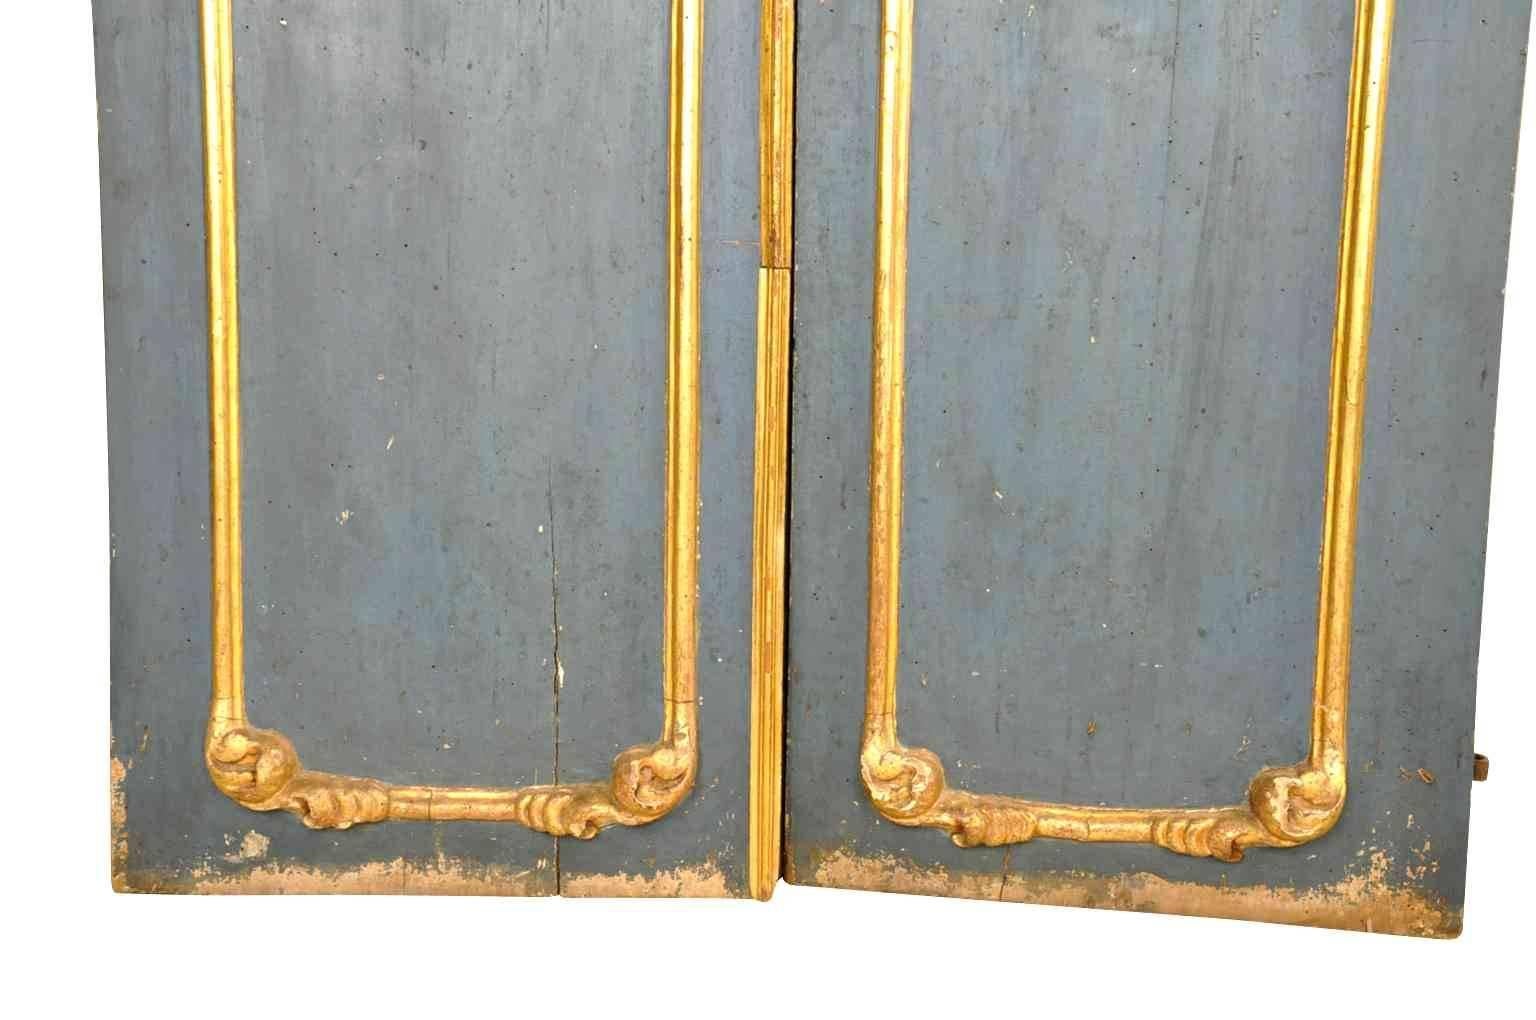 18th century doors